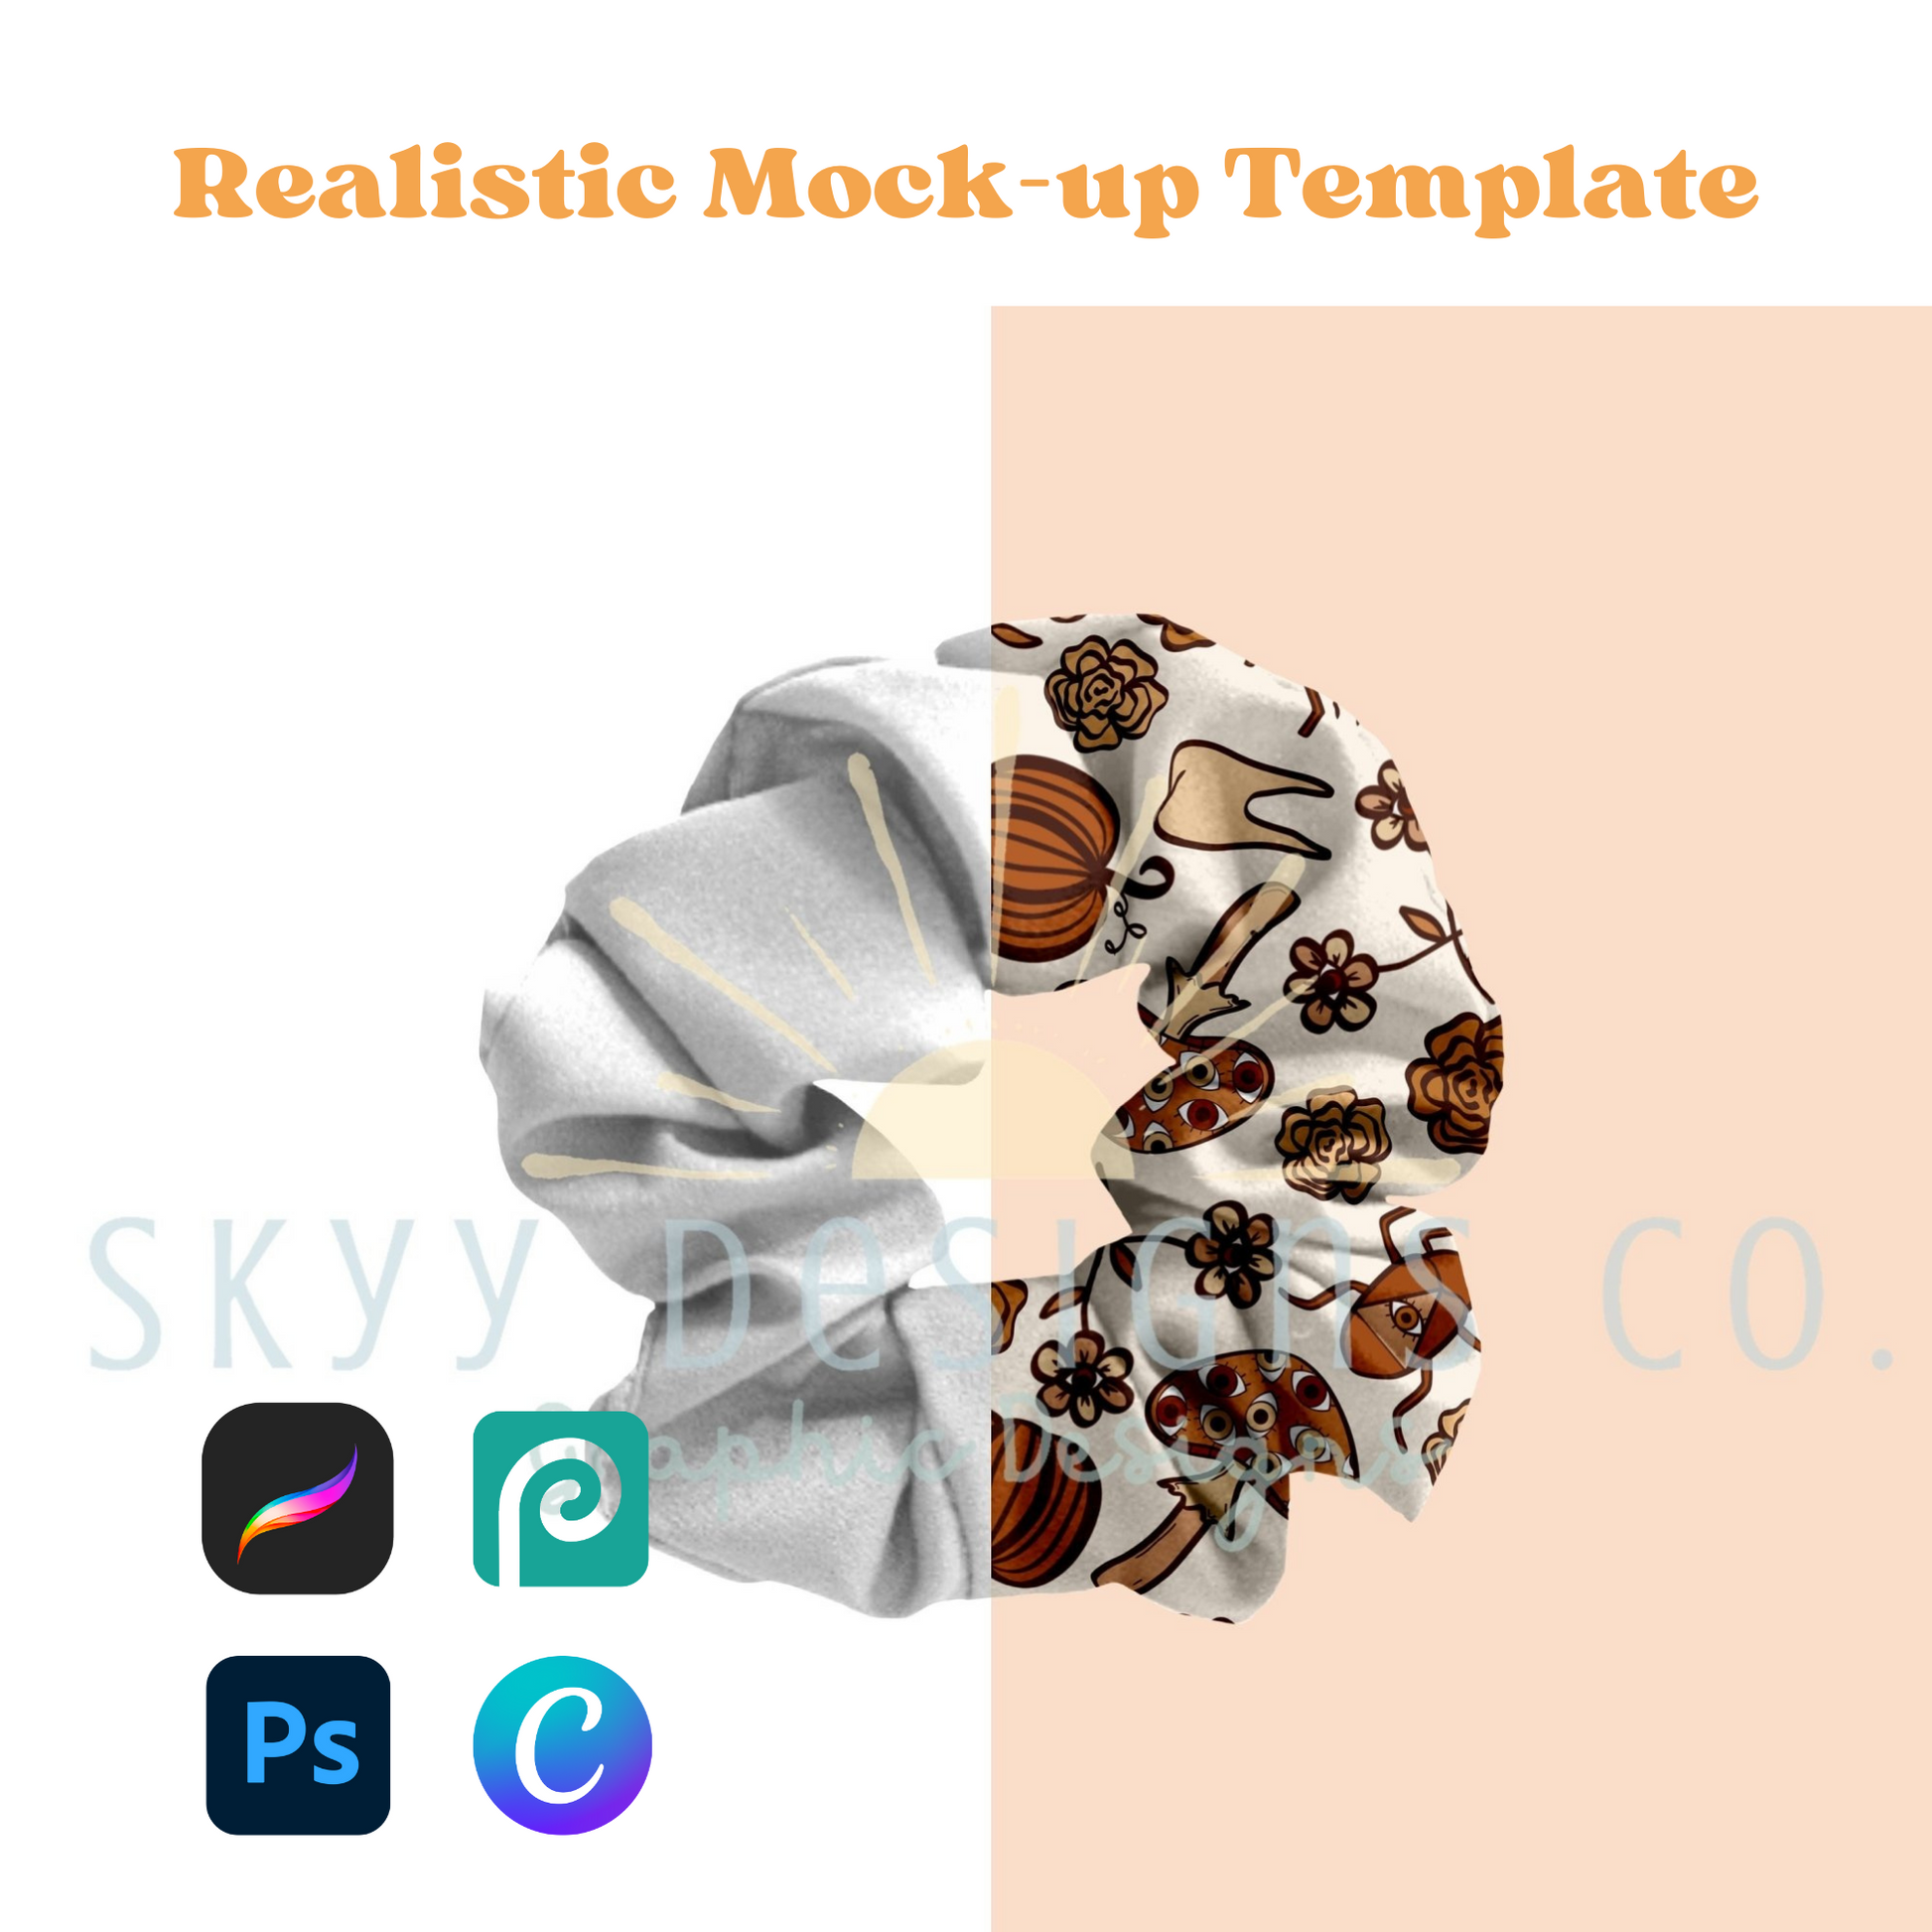 Scrunchie mock-up template - SkyyDesignsCo